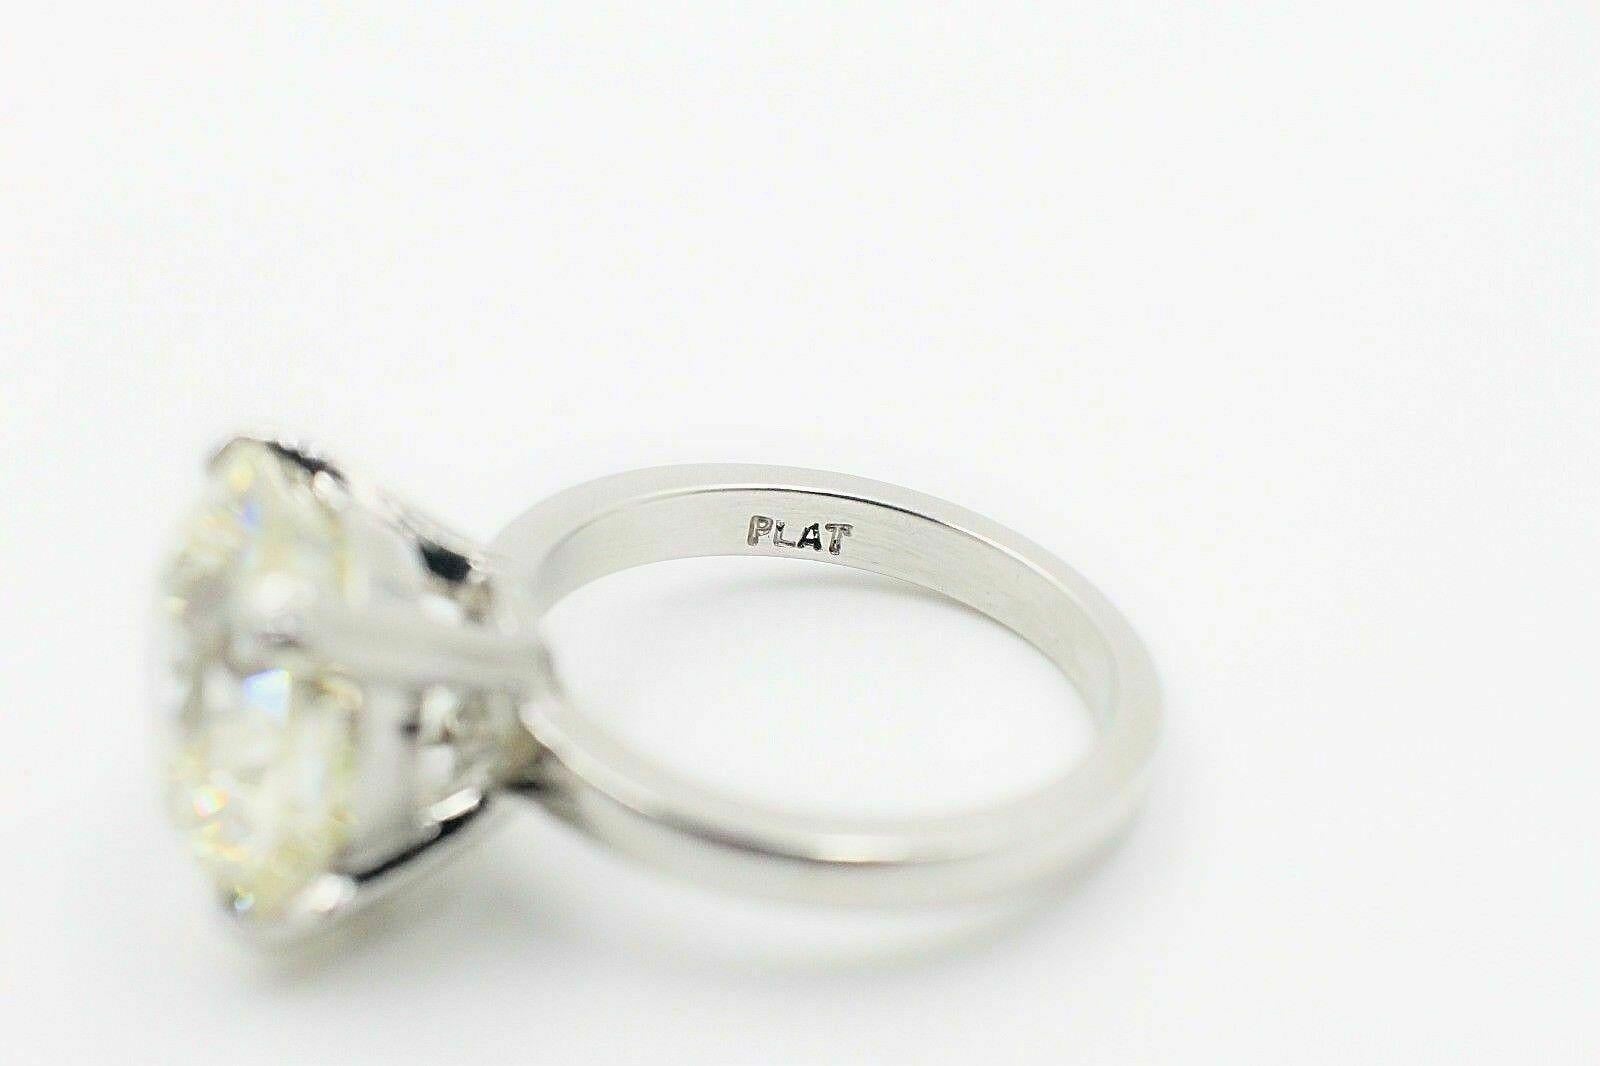 Old European Cut Diamond Engagement Ring 9.04 Carat in Platinum For Sale 5